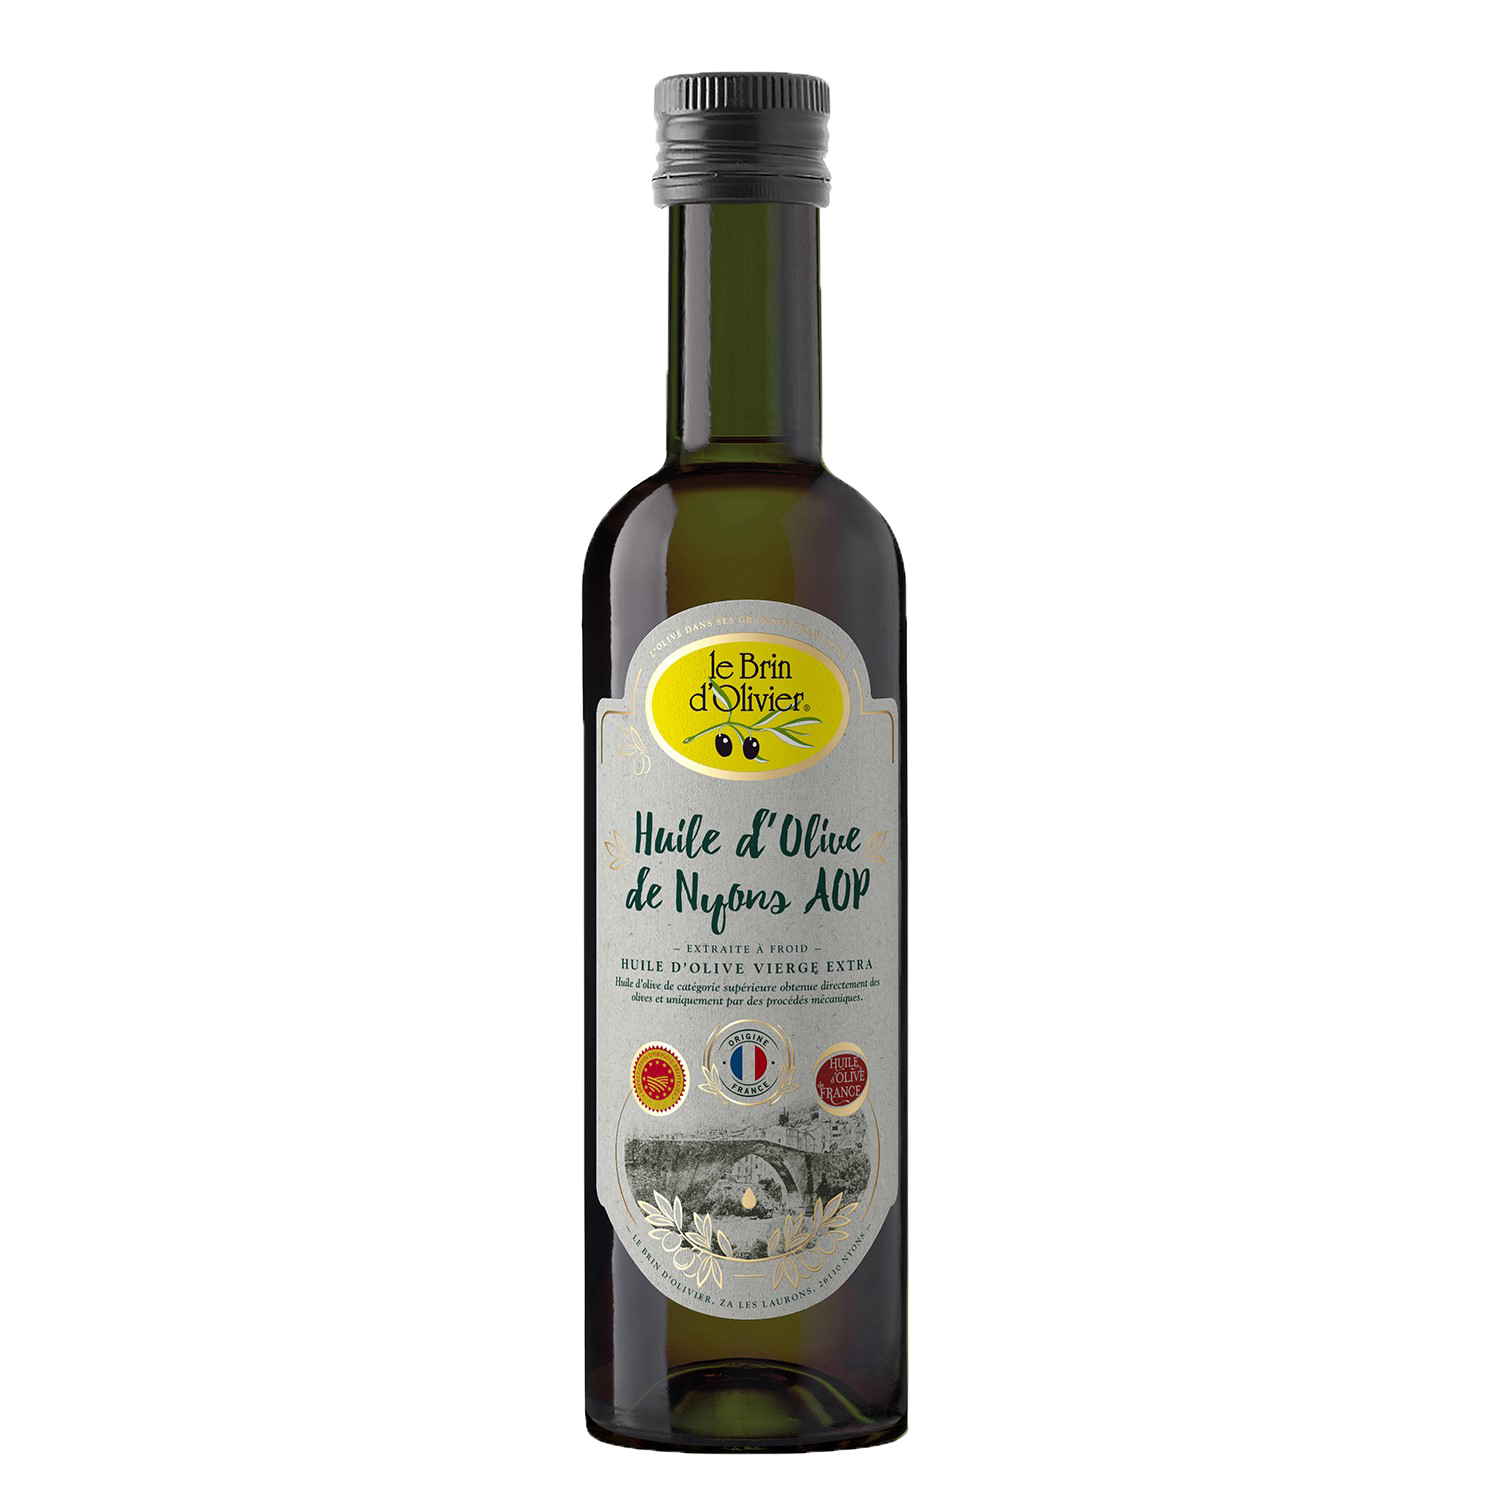 olives vertes dénoyautées LE BRIN D’OLIVIER 